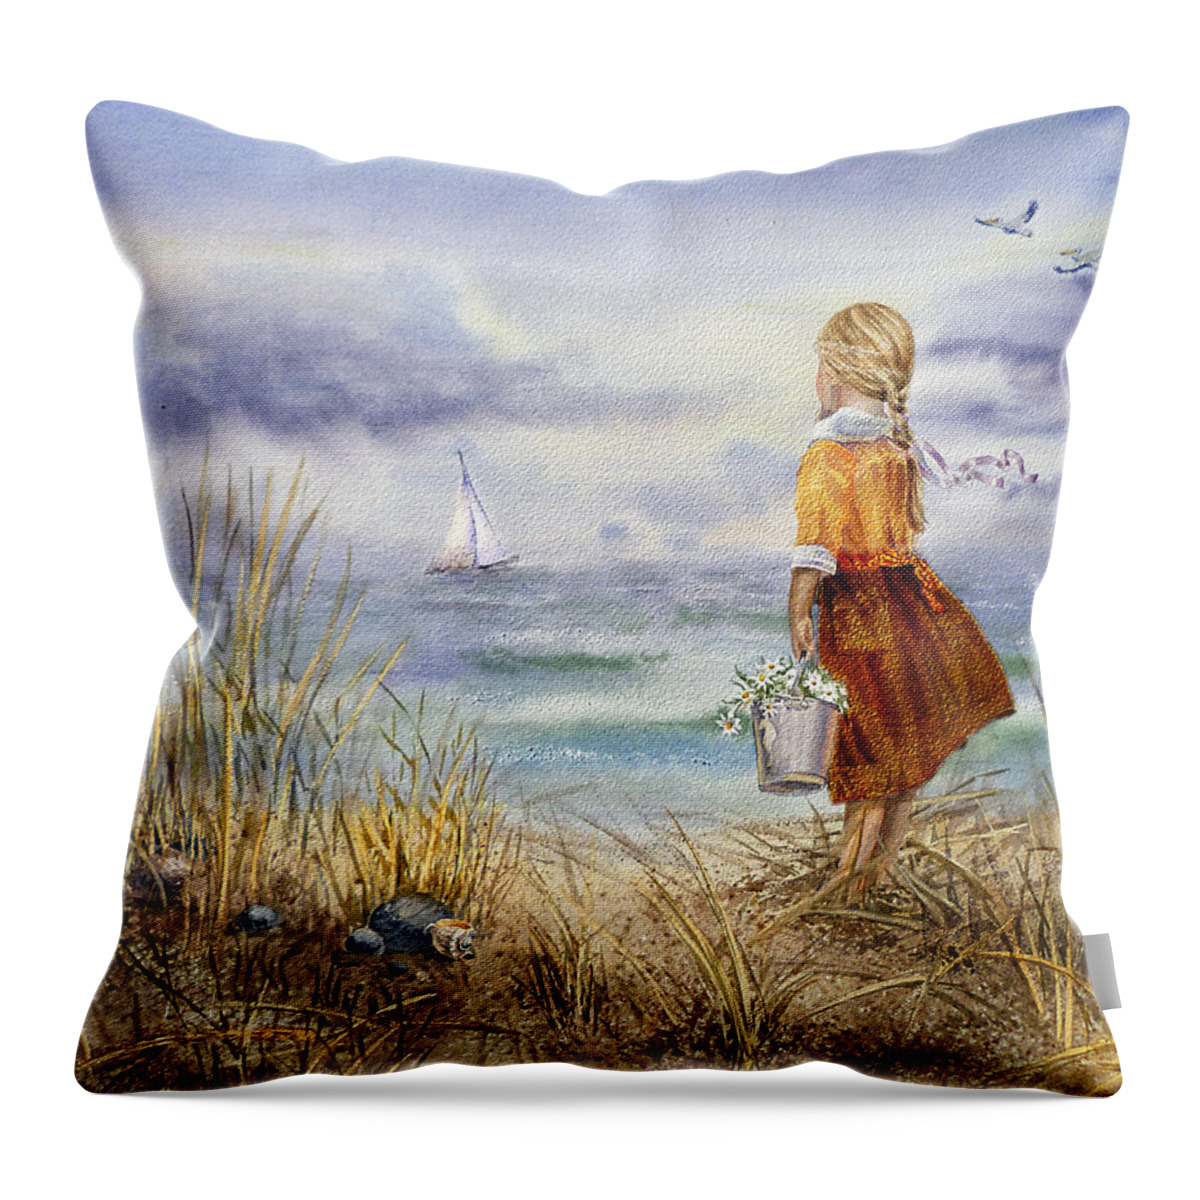 Girl And Ocean Throw Pillow featuring the painting A Girl And The Ocean by Irina Sztukowski